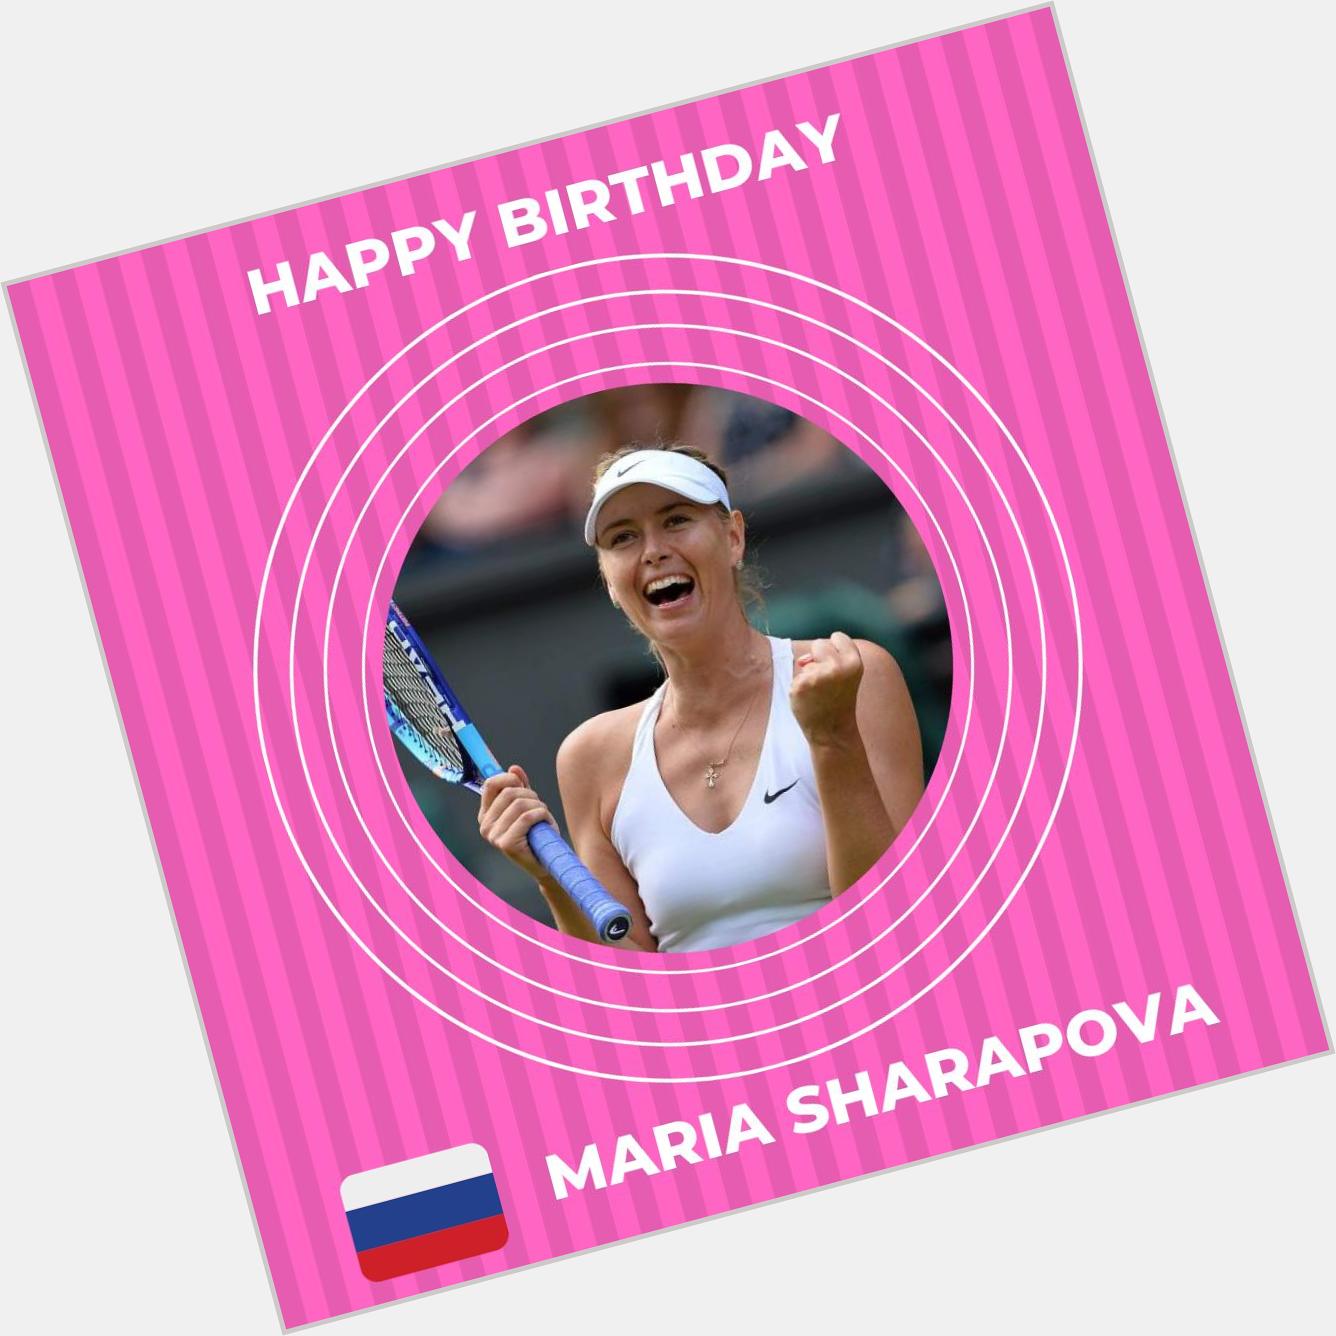  yi ki do dun Maria Sharapova - Happy birthday     